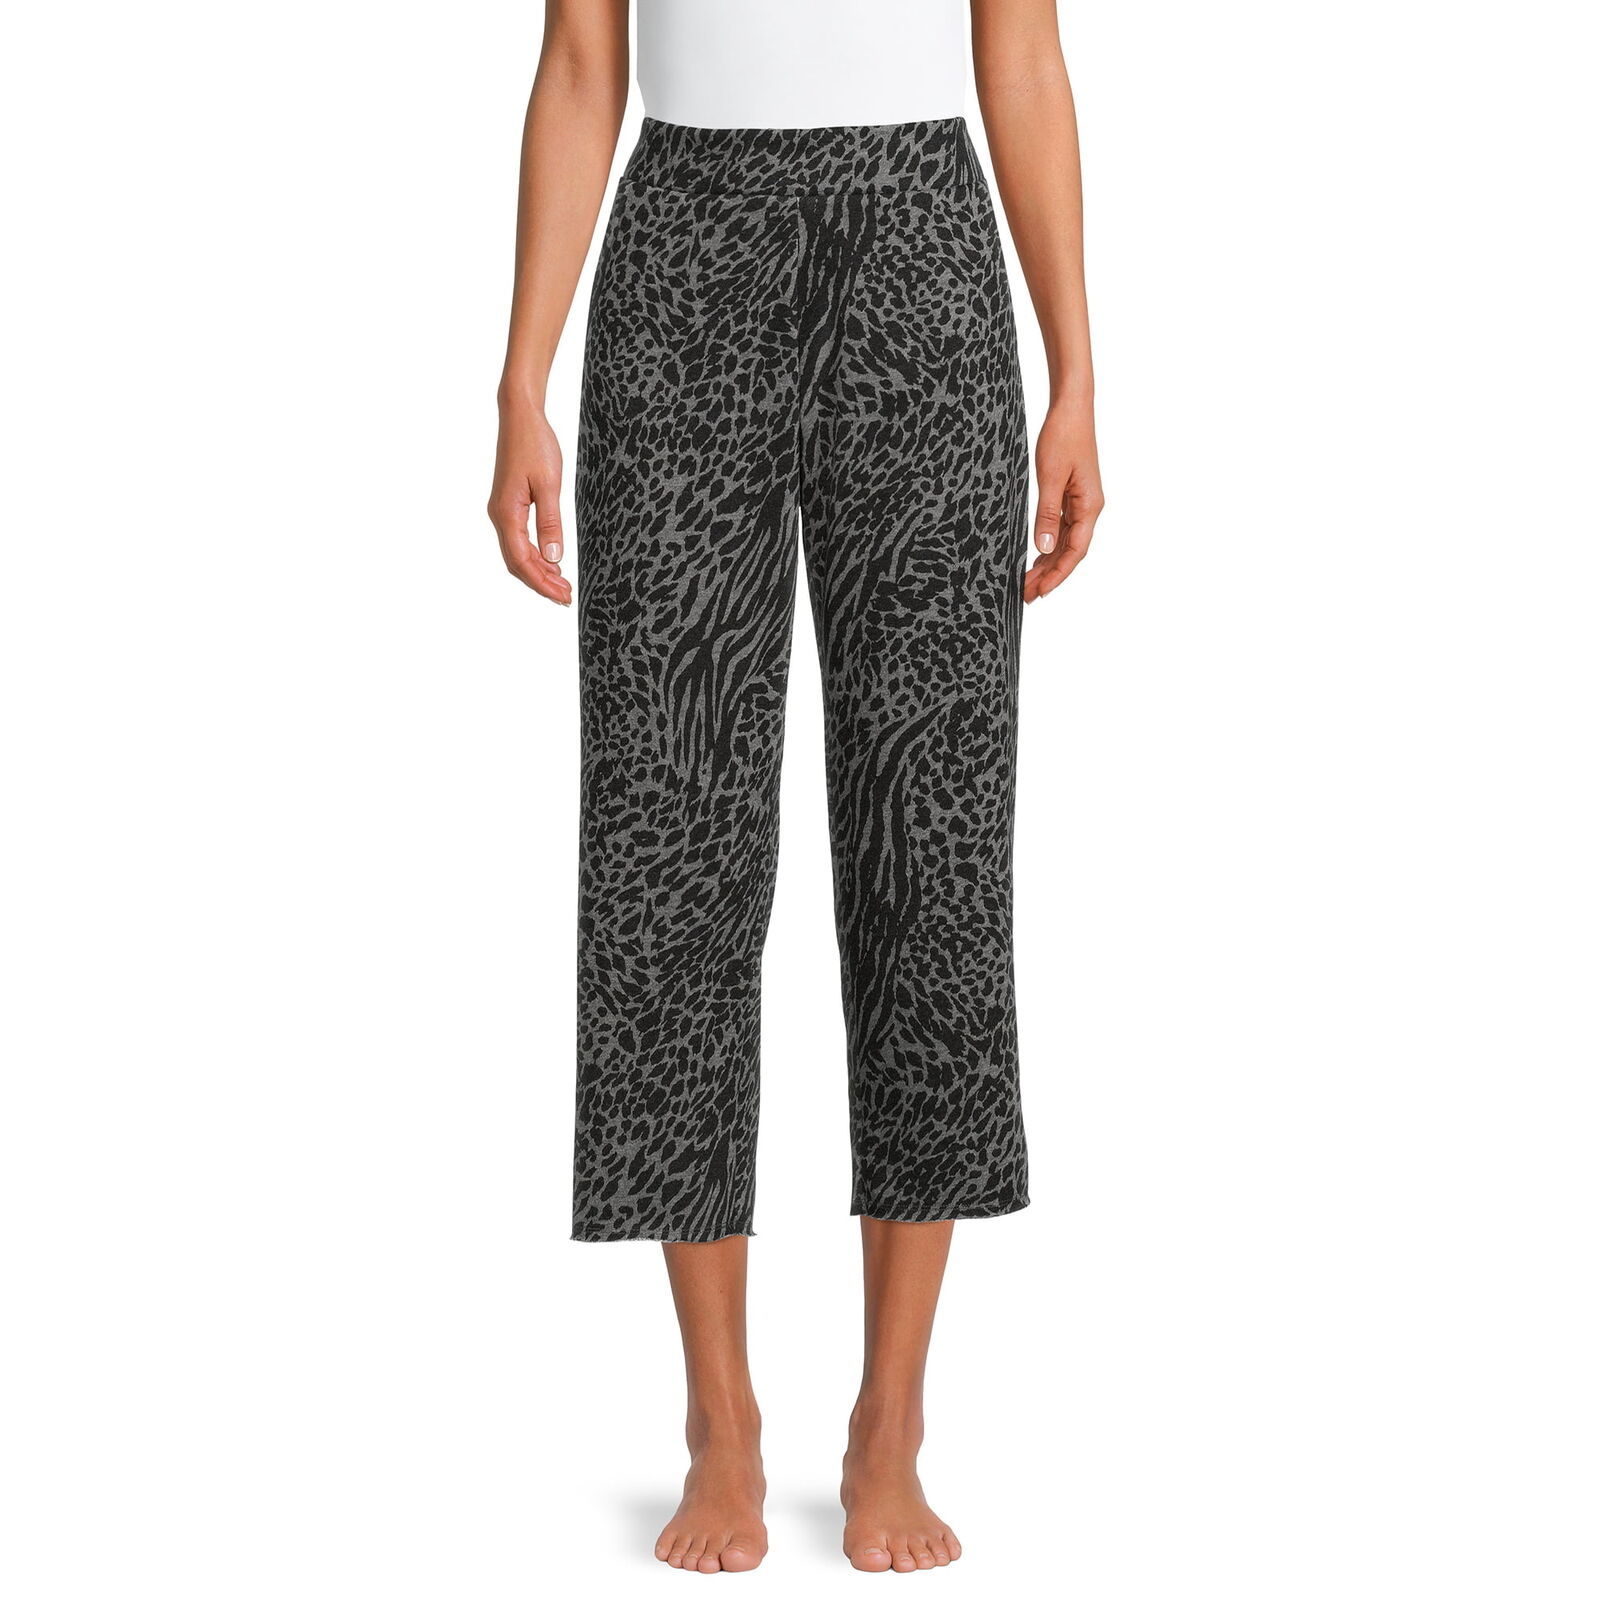 Primary image for Secret Treasures Women's Plus Sleep Pants Charcoal Grey Prt Size 2X (18W-20W)